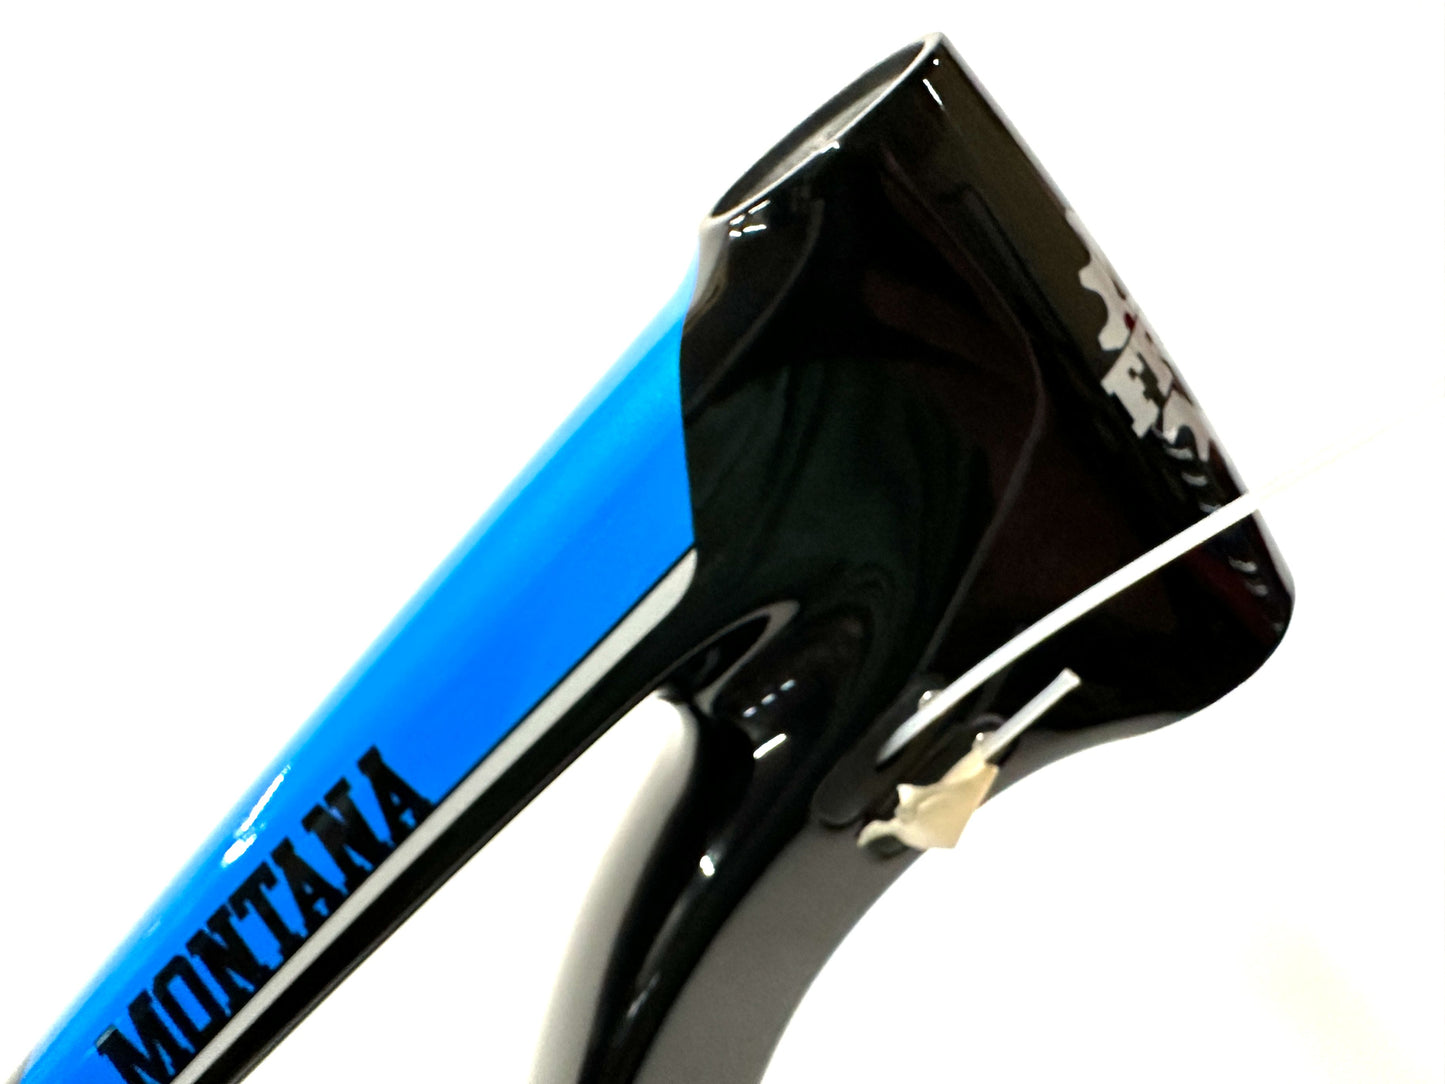 FRAMED 17" Montana Carbon Full Suspension Fat Bike Frame 27.5" Blue / Black NEW